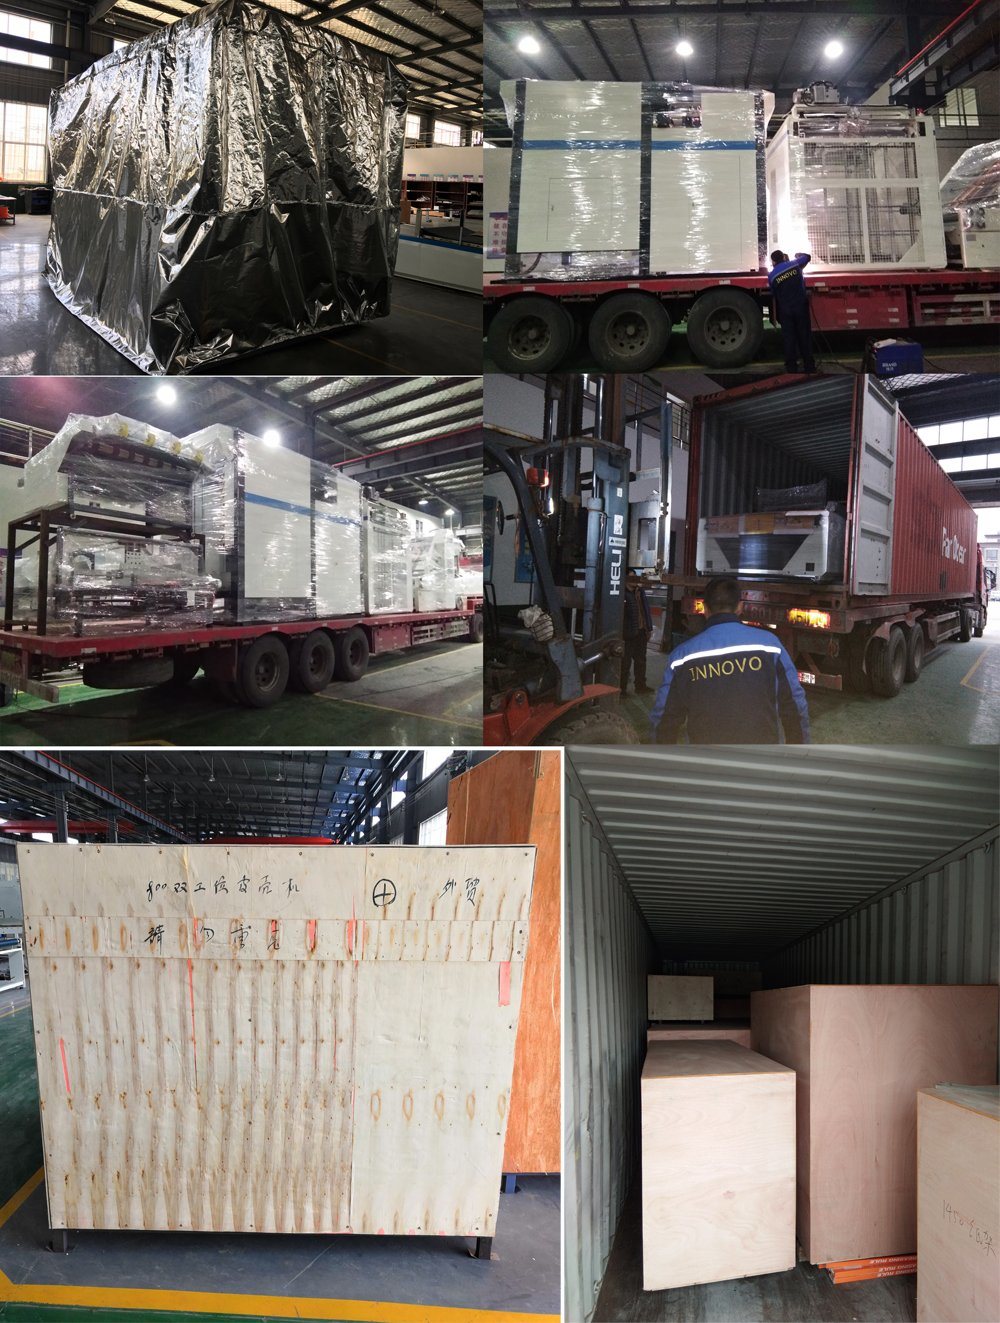 Anhui-Innovo-Bochen-Machinery-Manufacturing-Co-Ltd- (2)